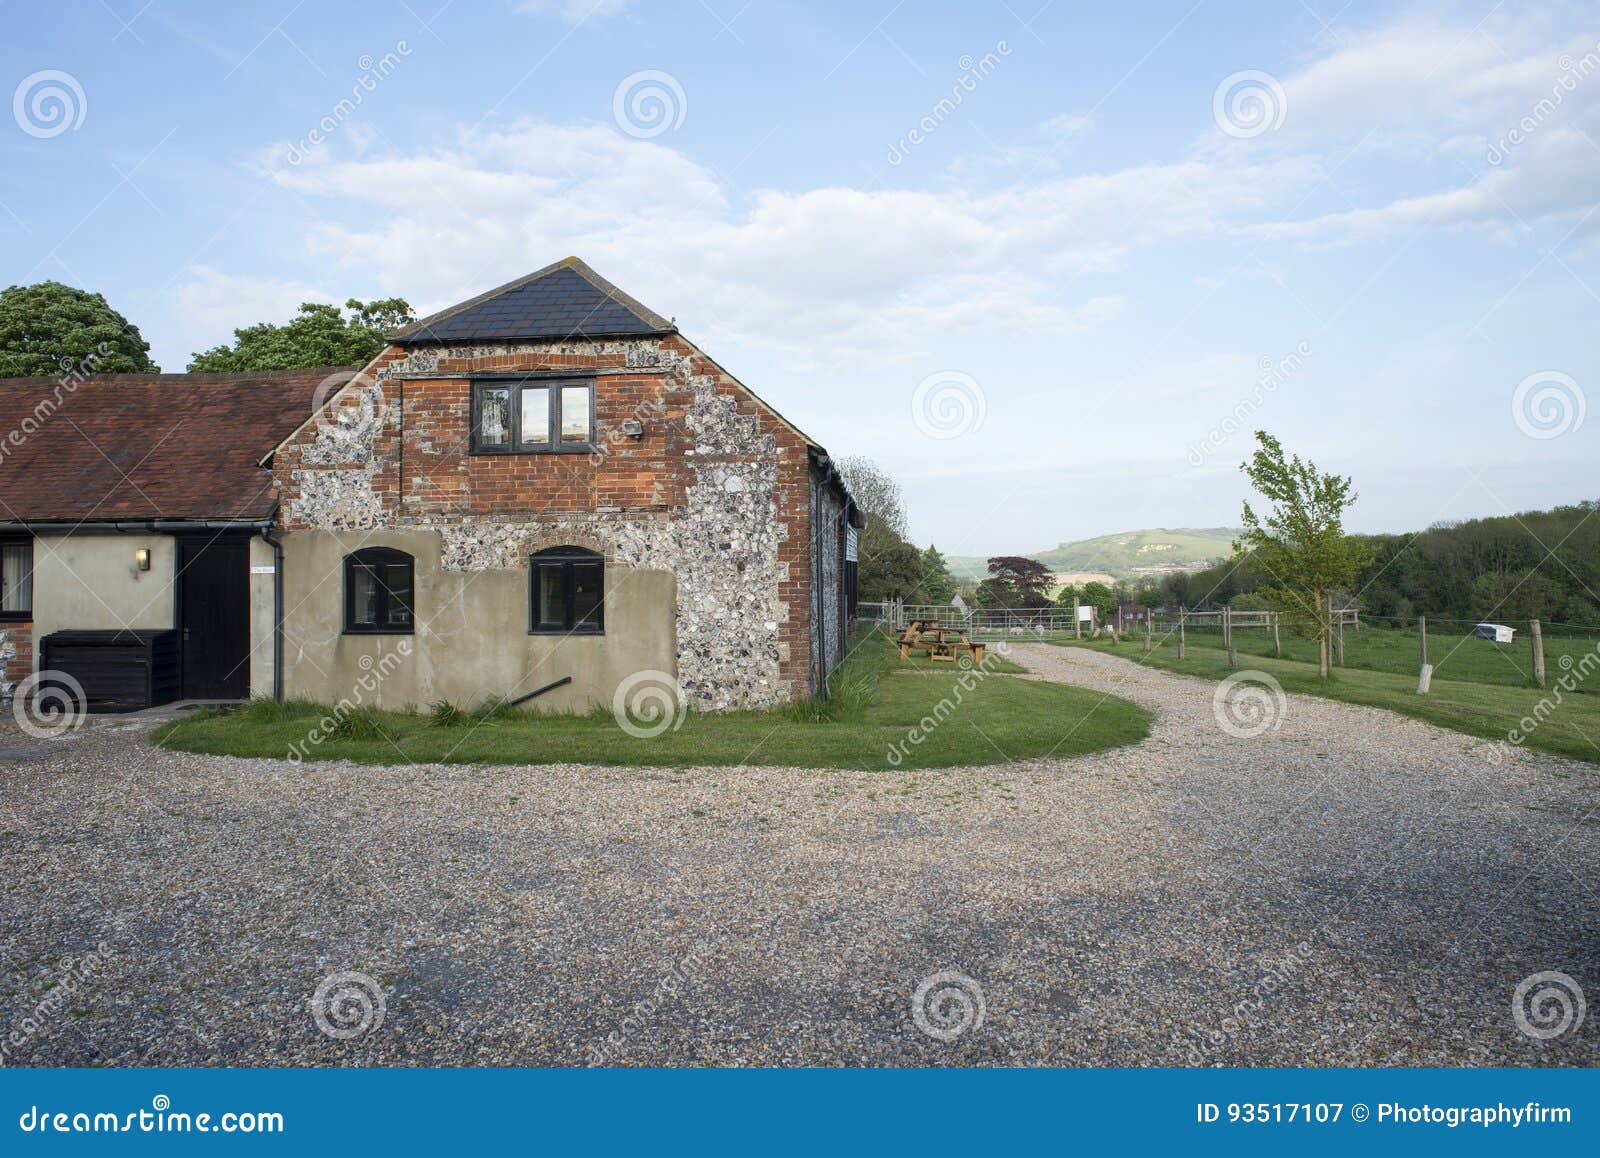 brick barn house and surrounding gravel driveway